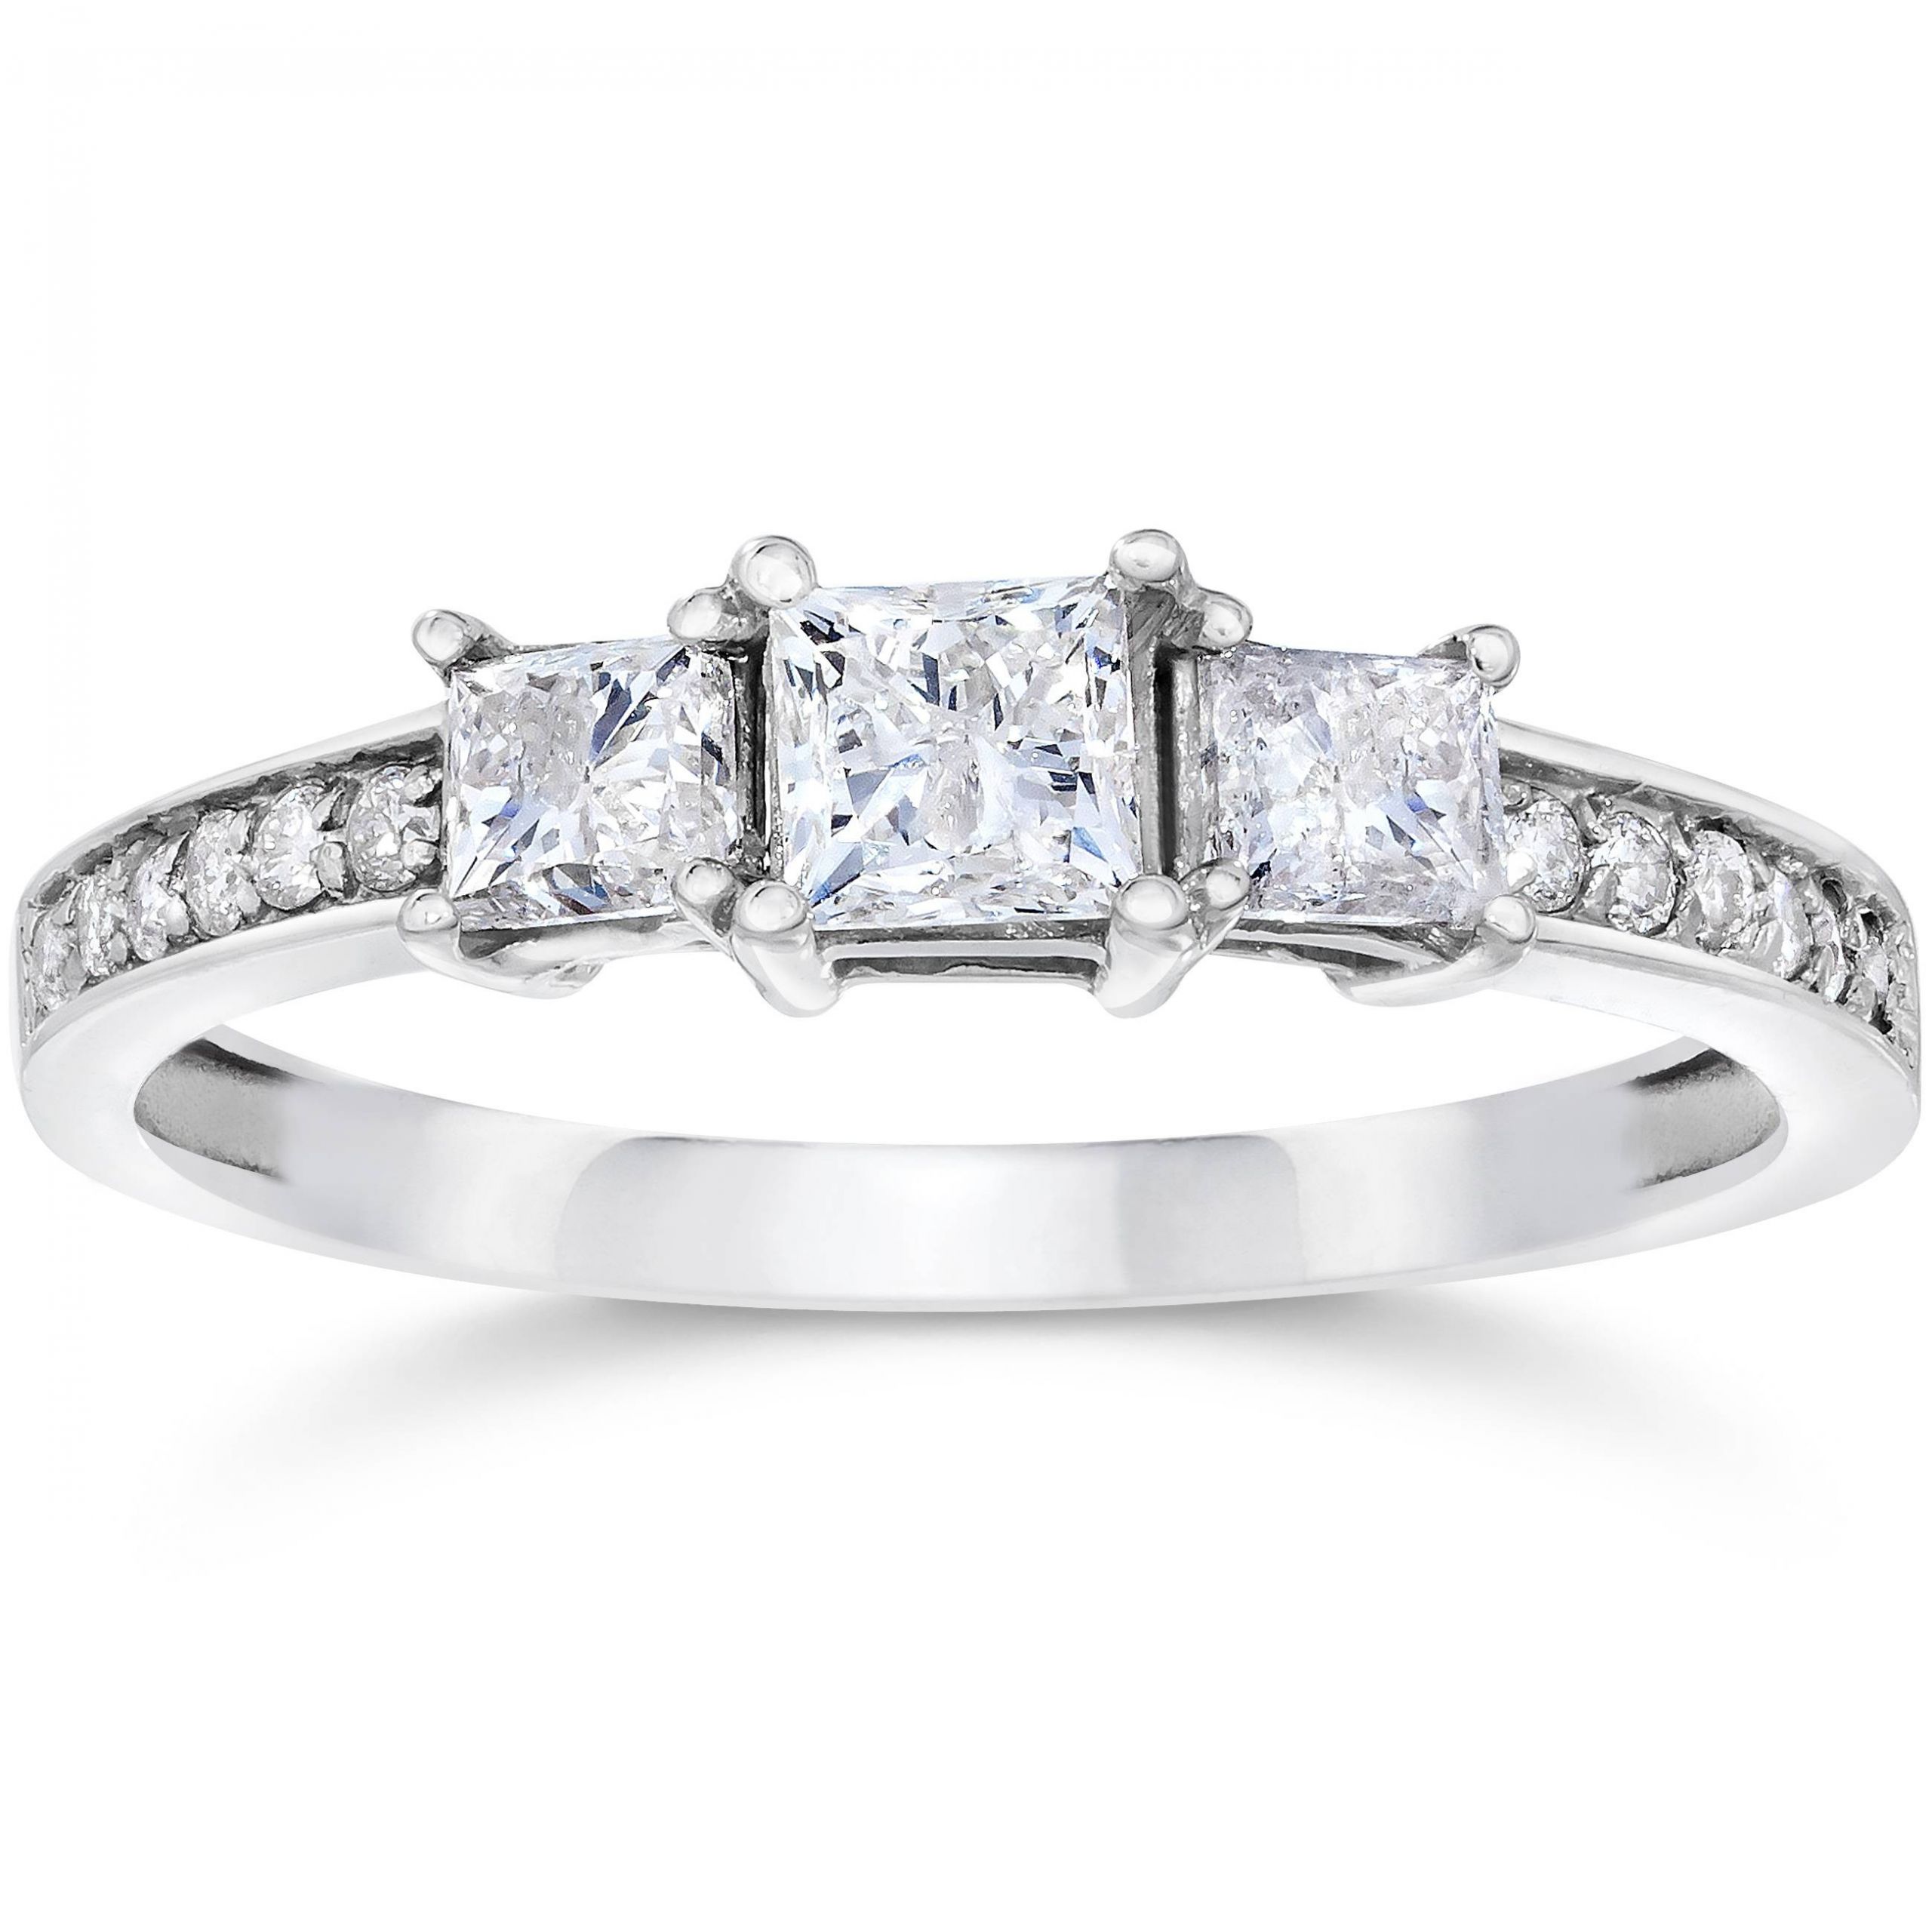 3 Stone Princess Cut Diamond Engagement Ring
 1 2ct Three Stone Princess Cut Diamond Engagement Ring 14K